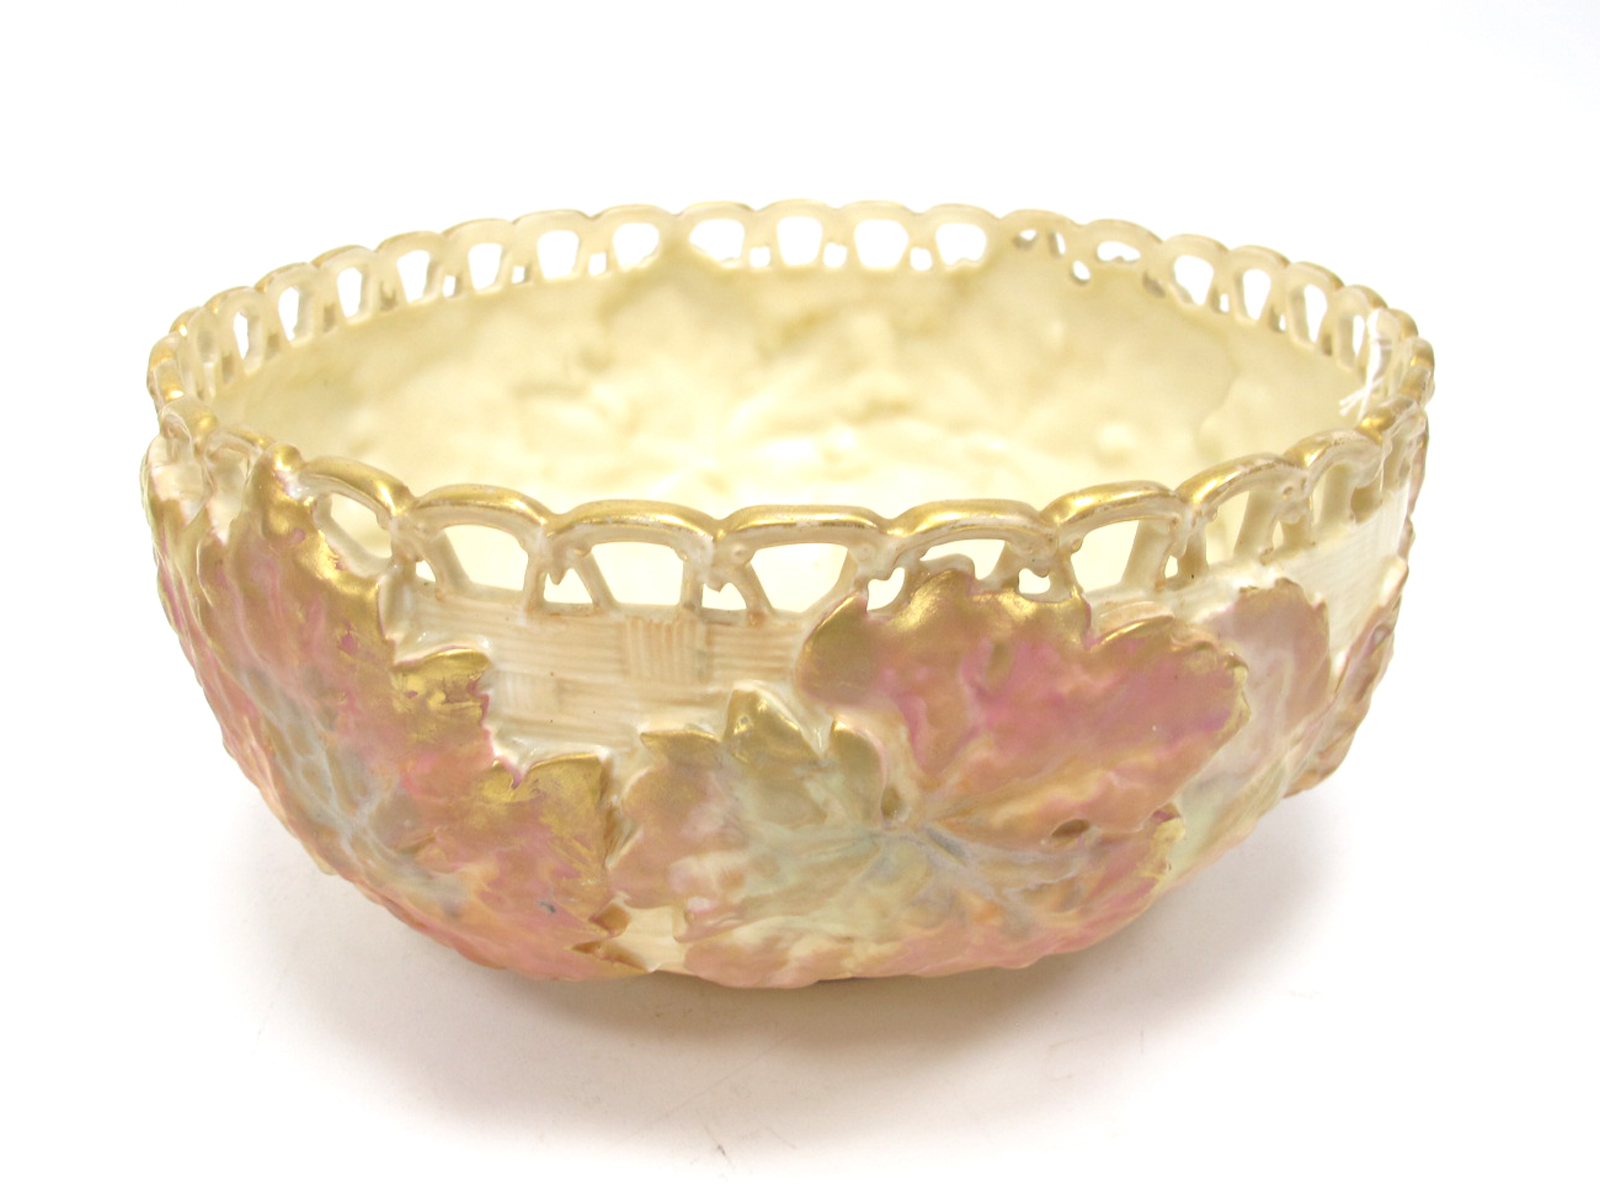 A Royal Worcester Porcelain Circular Bowl, with a pierced rim, blush ivory basket work, ground